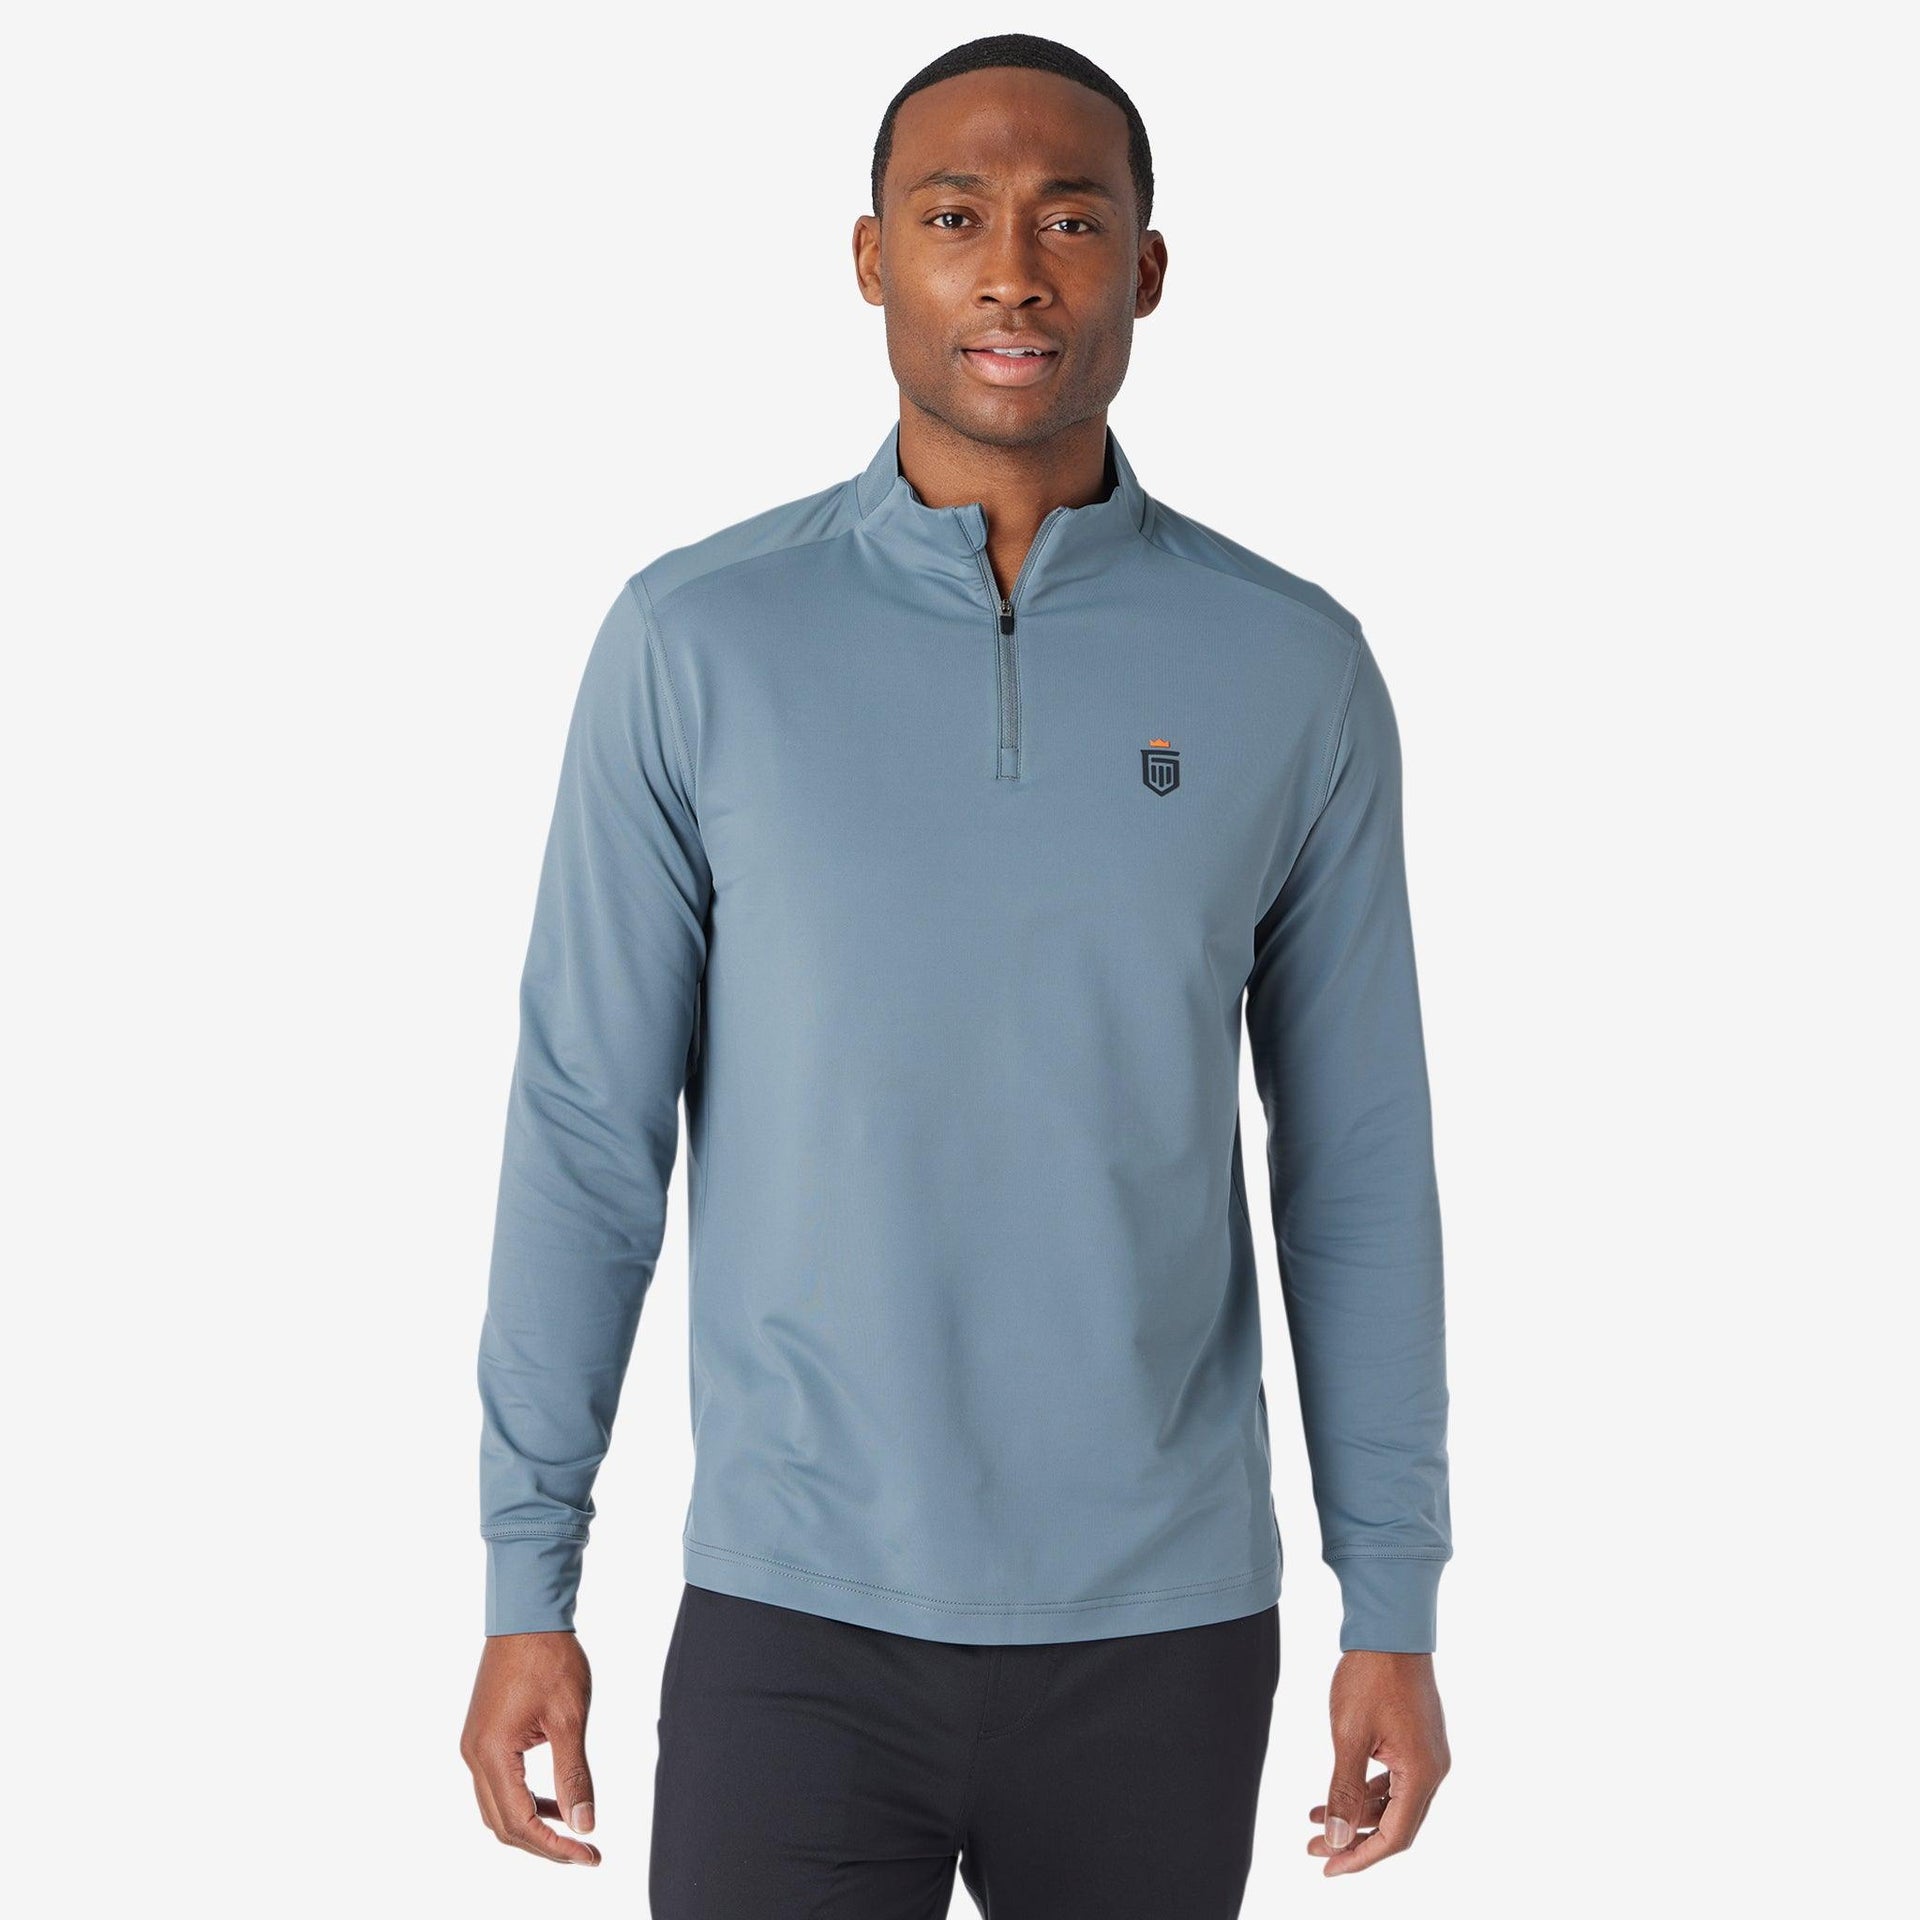 Boys' Fleece 1/4 Zip Pullover Hoodie Sweatshirt - All in Motion Blue